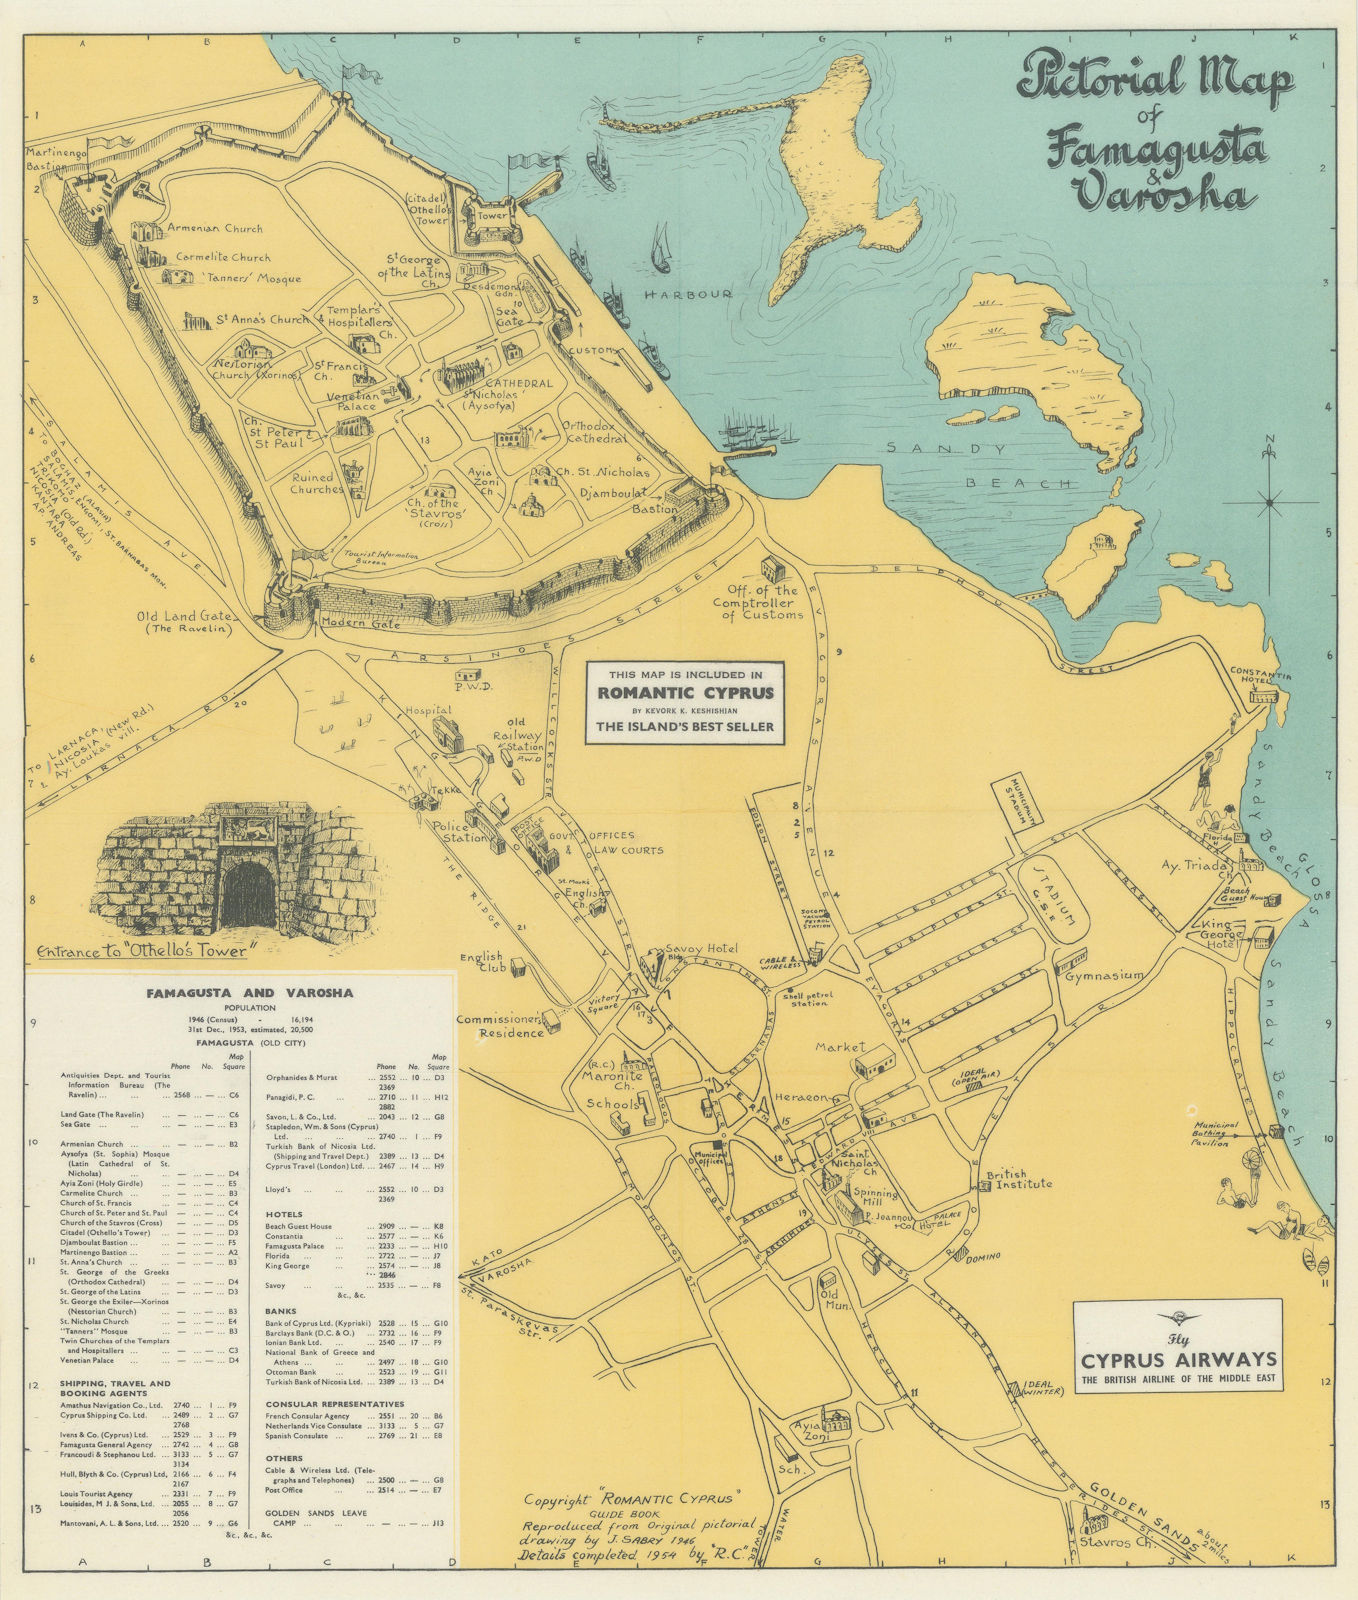 Famagusta & Varosha pictorial map vintage city plan Gazimagusa Cyprus SABRY 1954